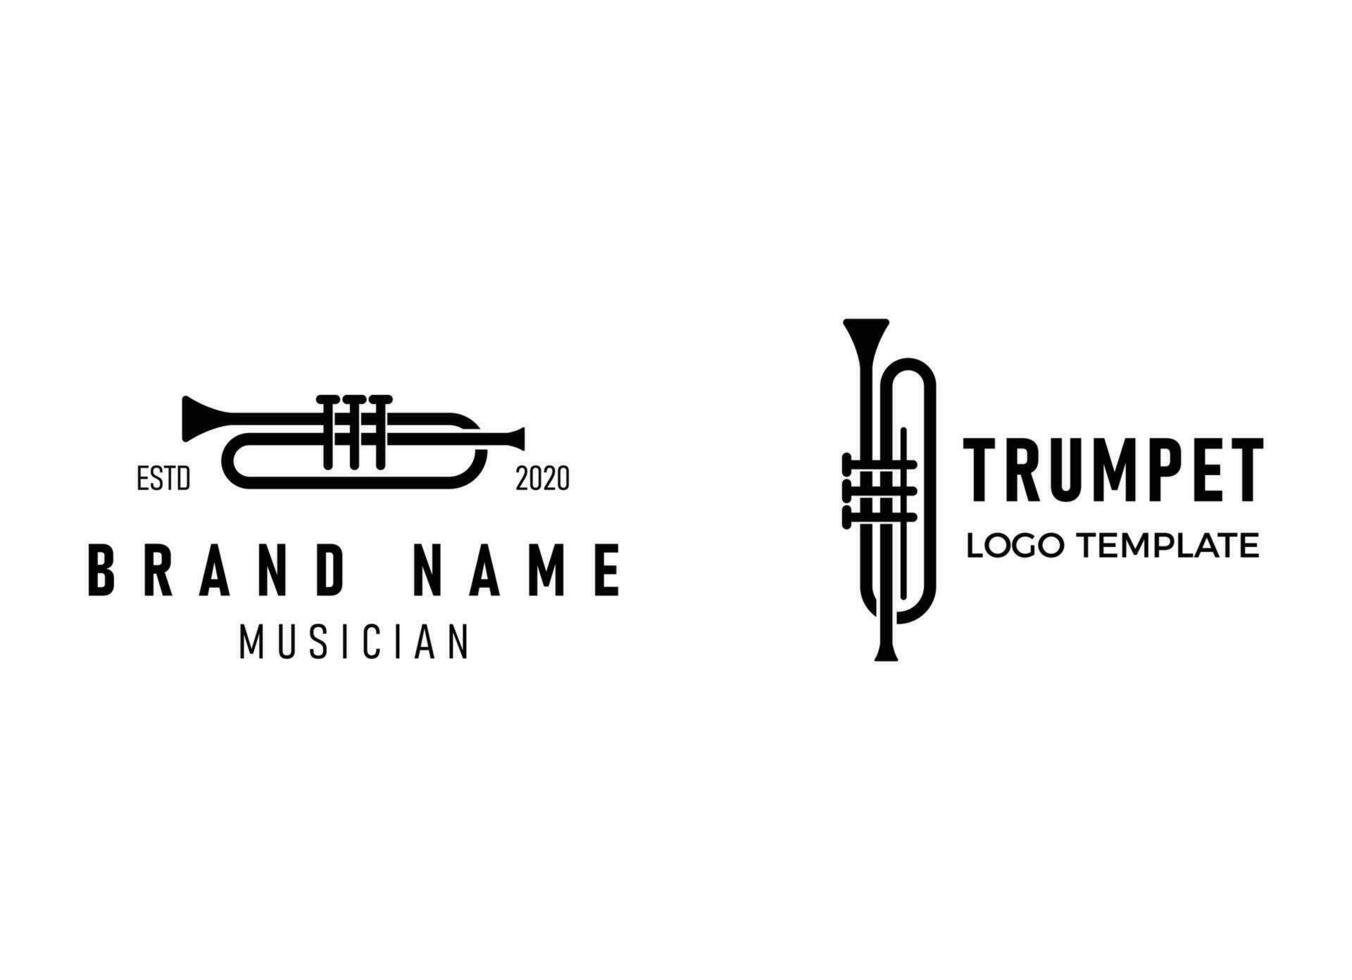 Trumpet logo design, generate melody, musical jazz instrument vector sketch illustration